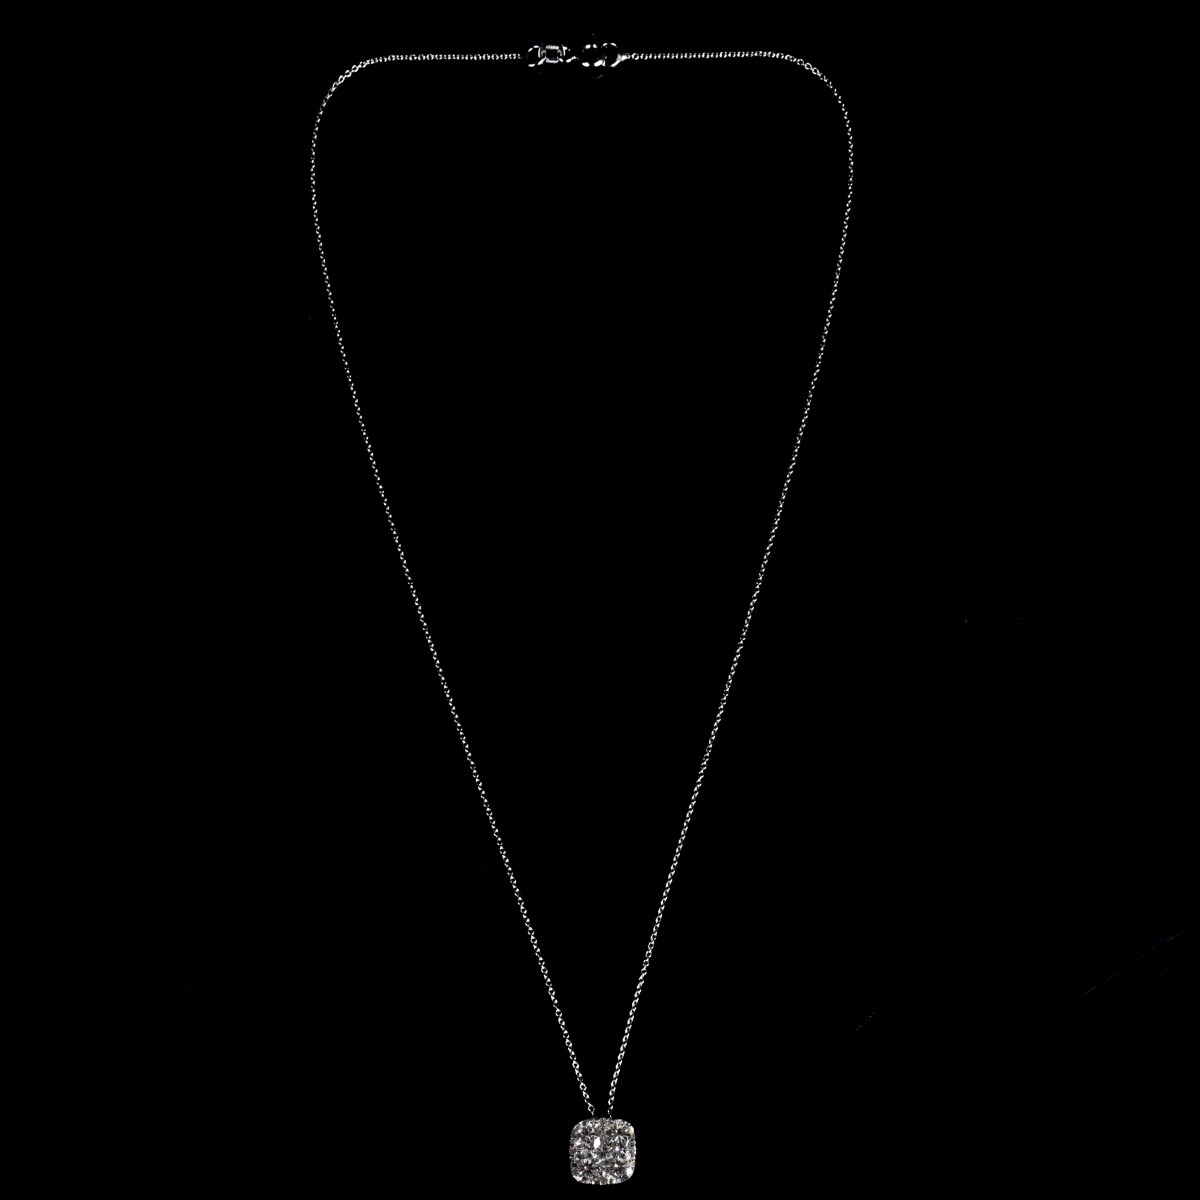 Diamond and 18K Pendant Necklace